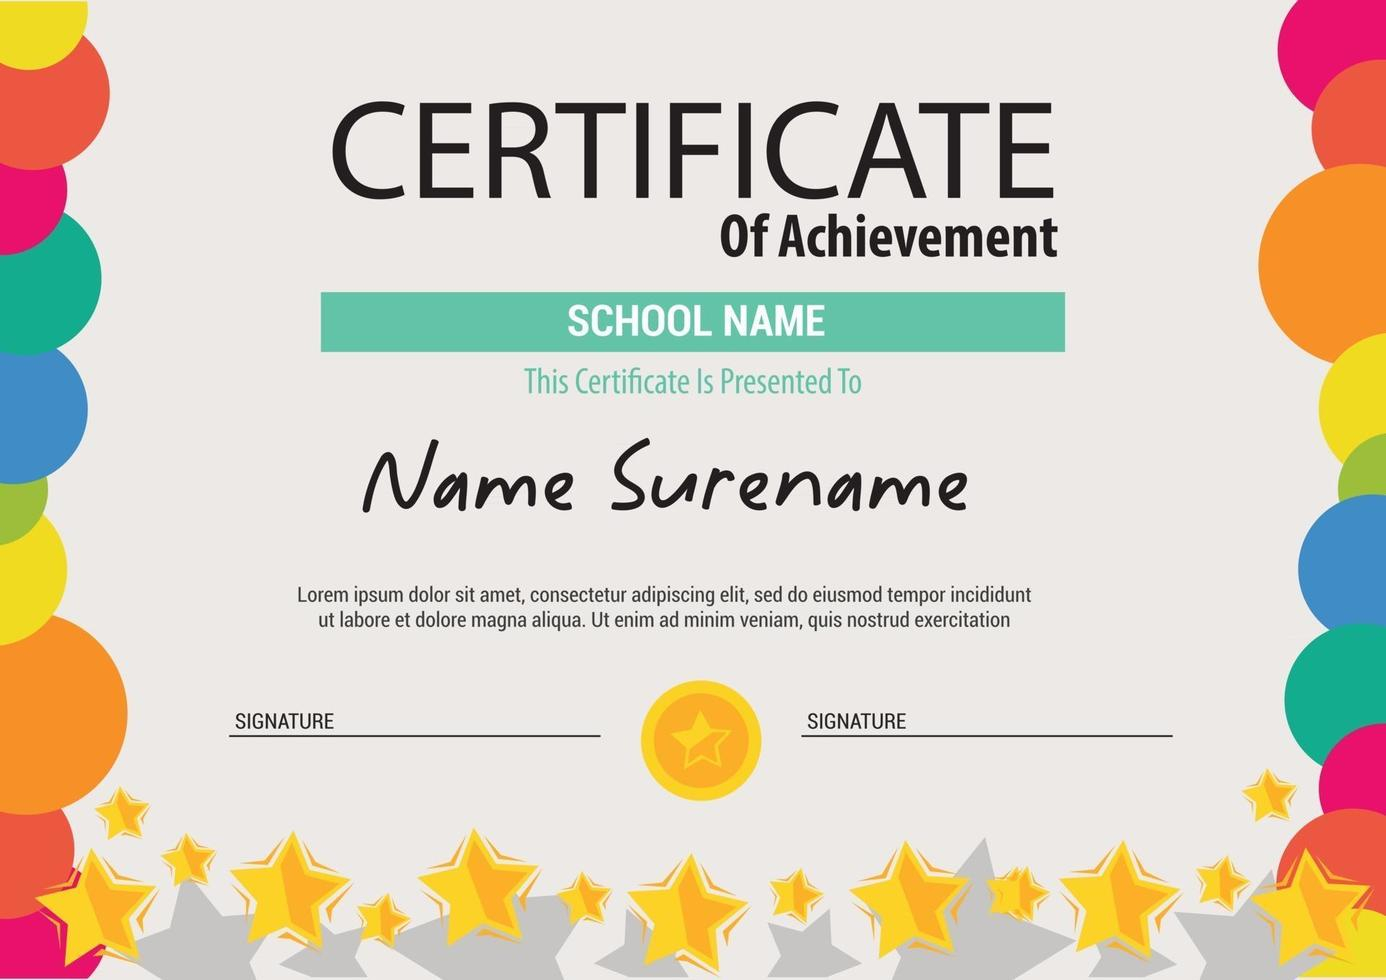 Multipurpose Professional Certificate Template Design kids  For Certificate Of Achievement Template For Kids